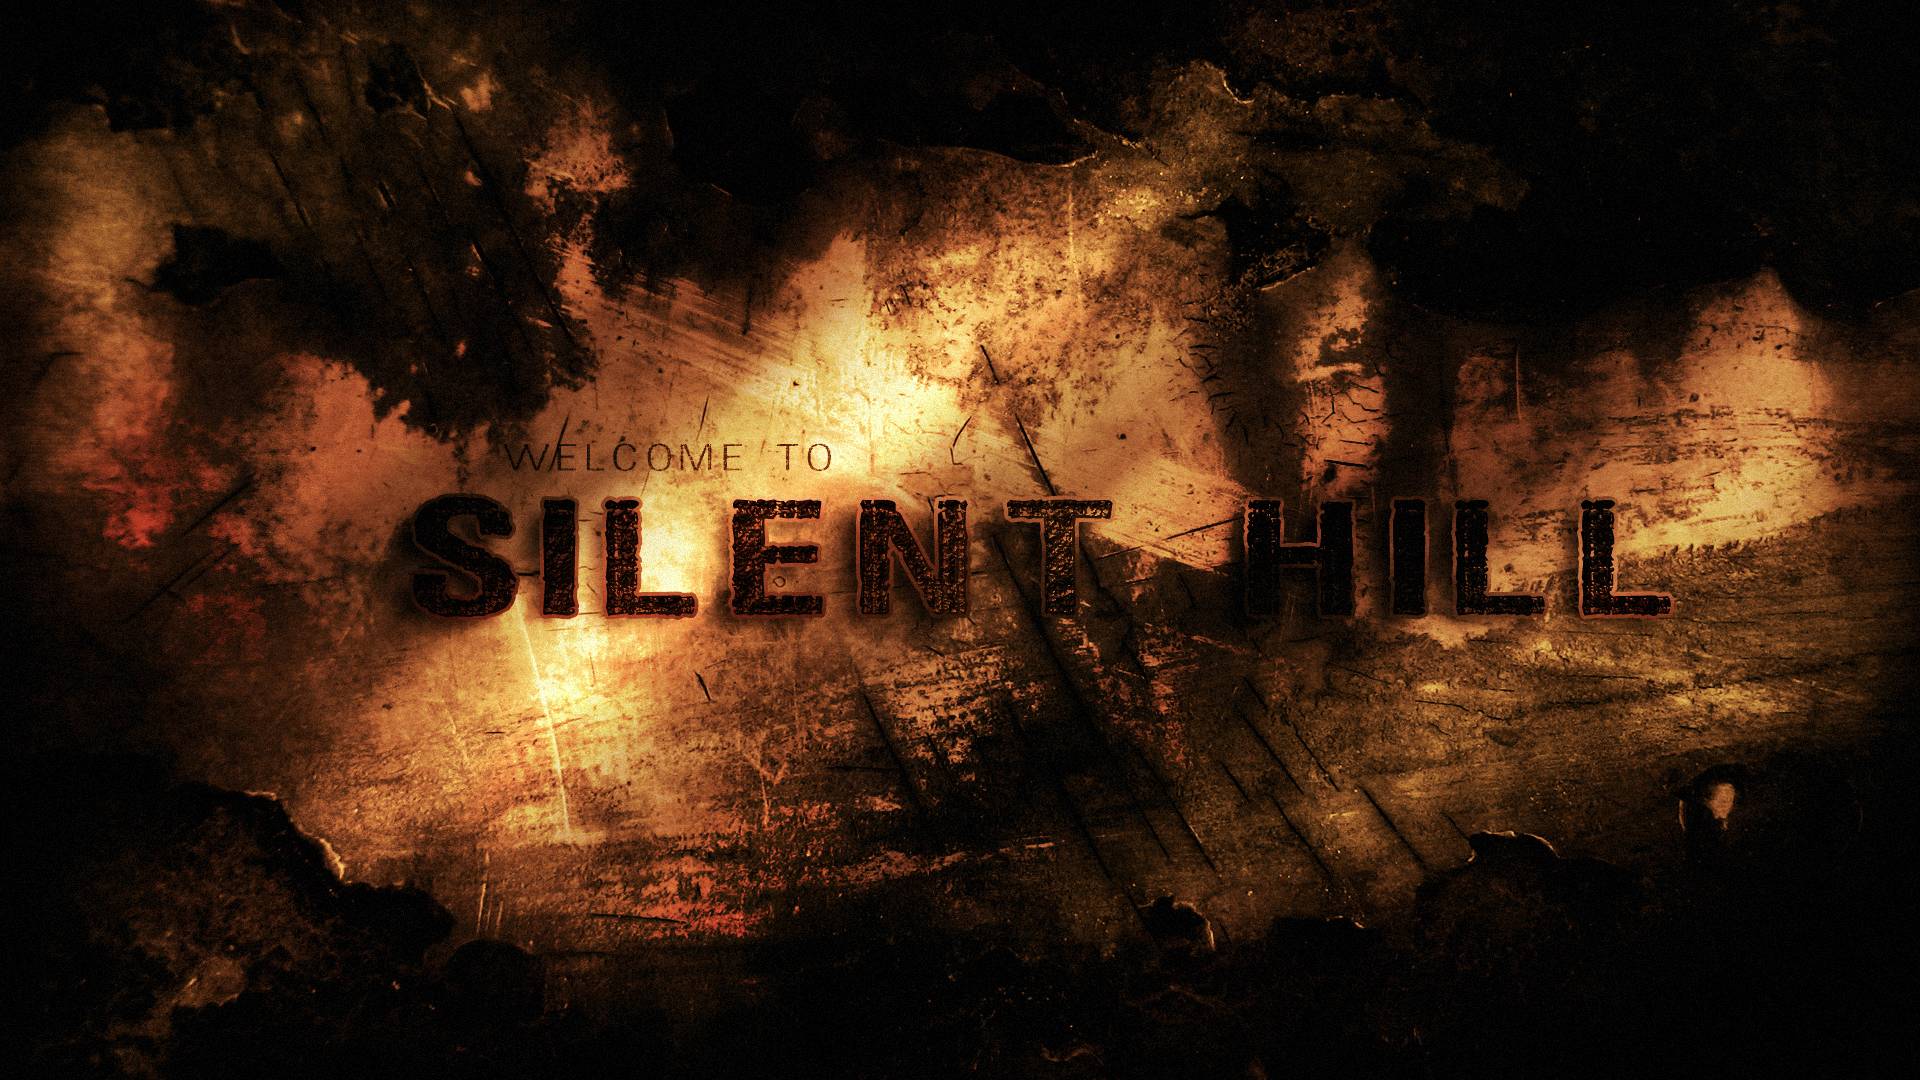 49 Silent Hill Wallpaper 1920x1080 On Wallpapersafari